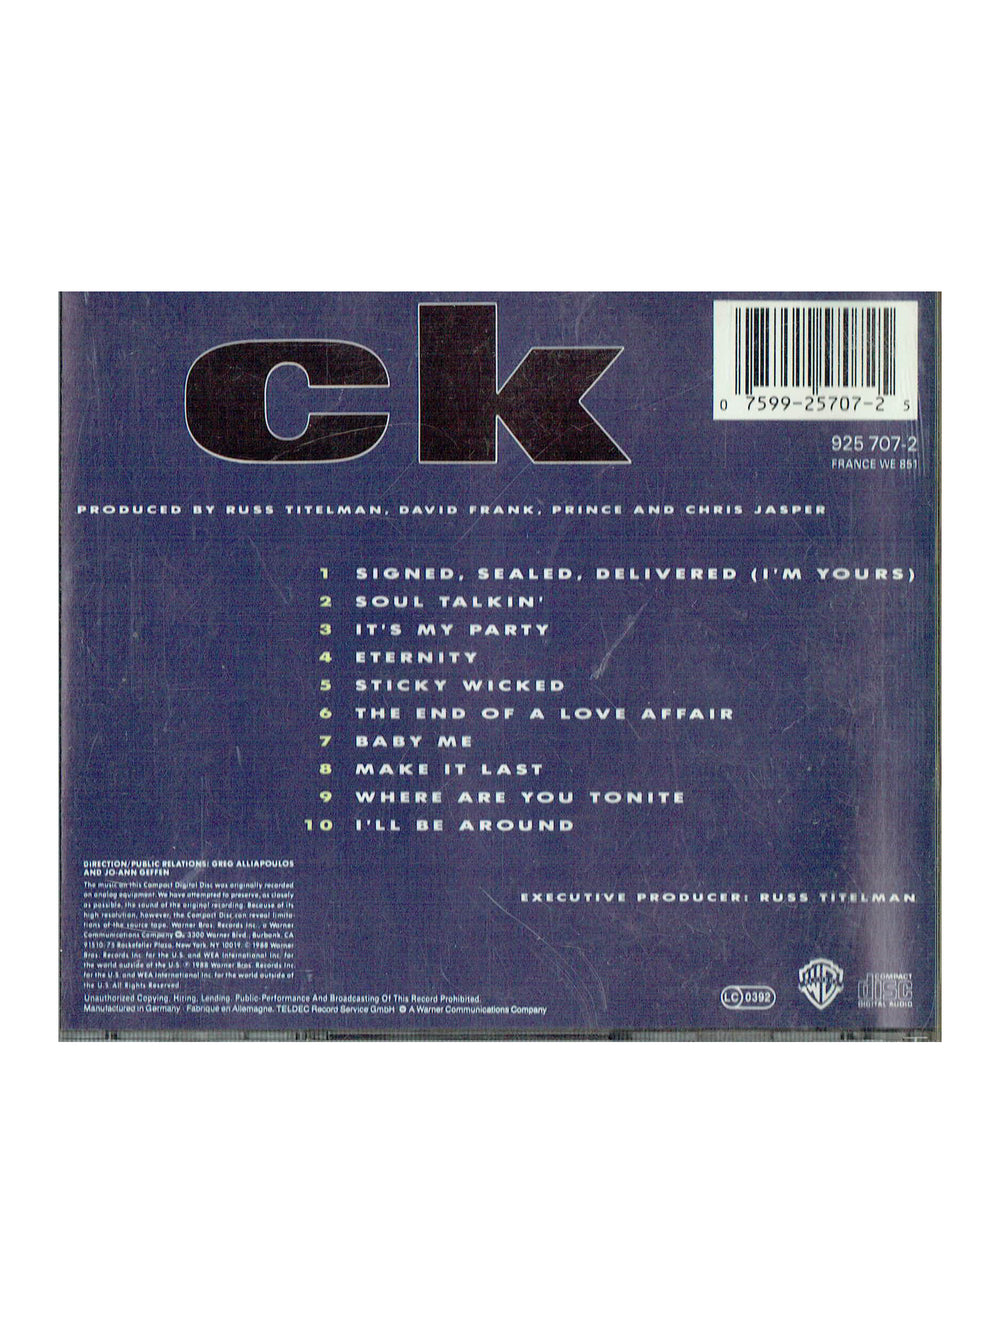 Chaka Khan C K CD Album 1988 UK EU Release Two Tracks By Prince